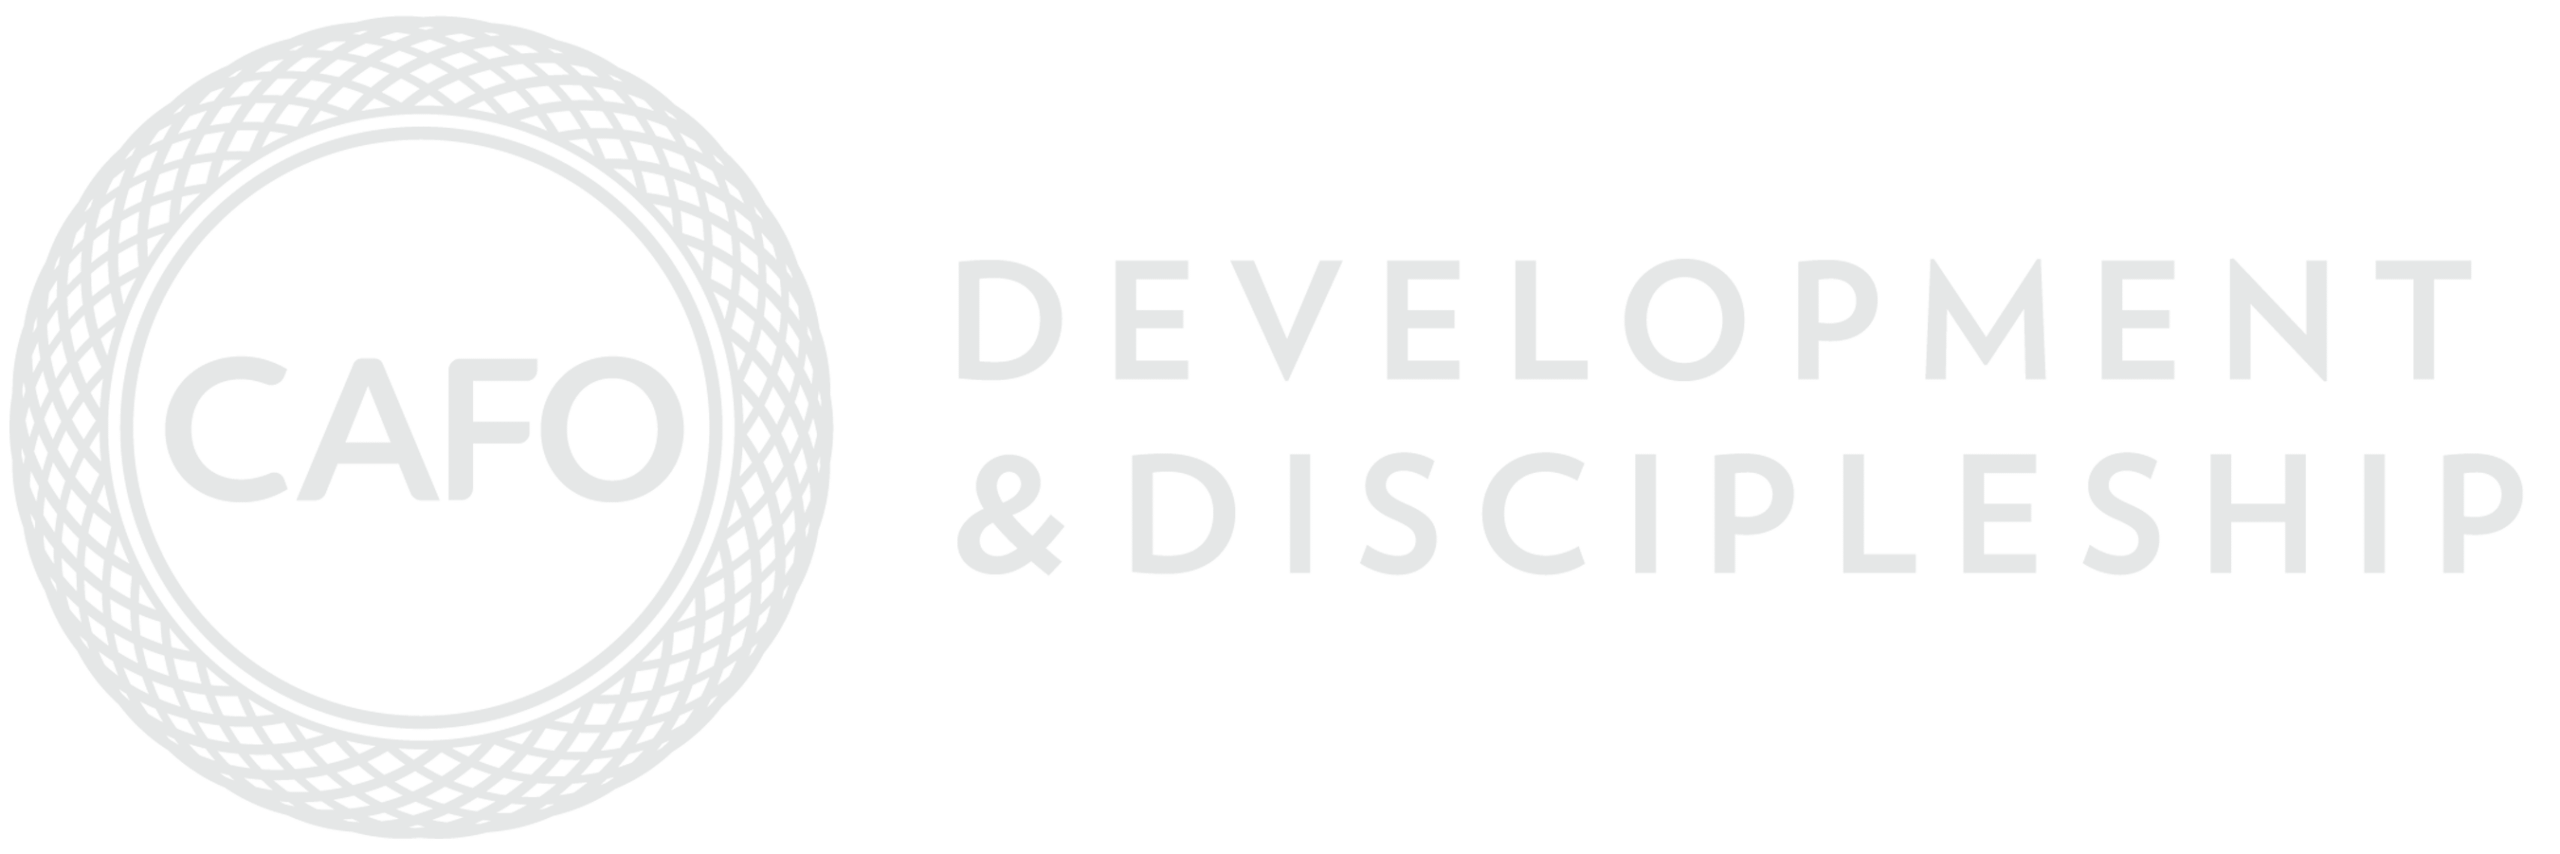 CAFO_Development+Discipleship_Grey (1)